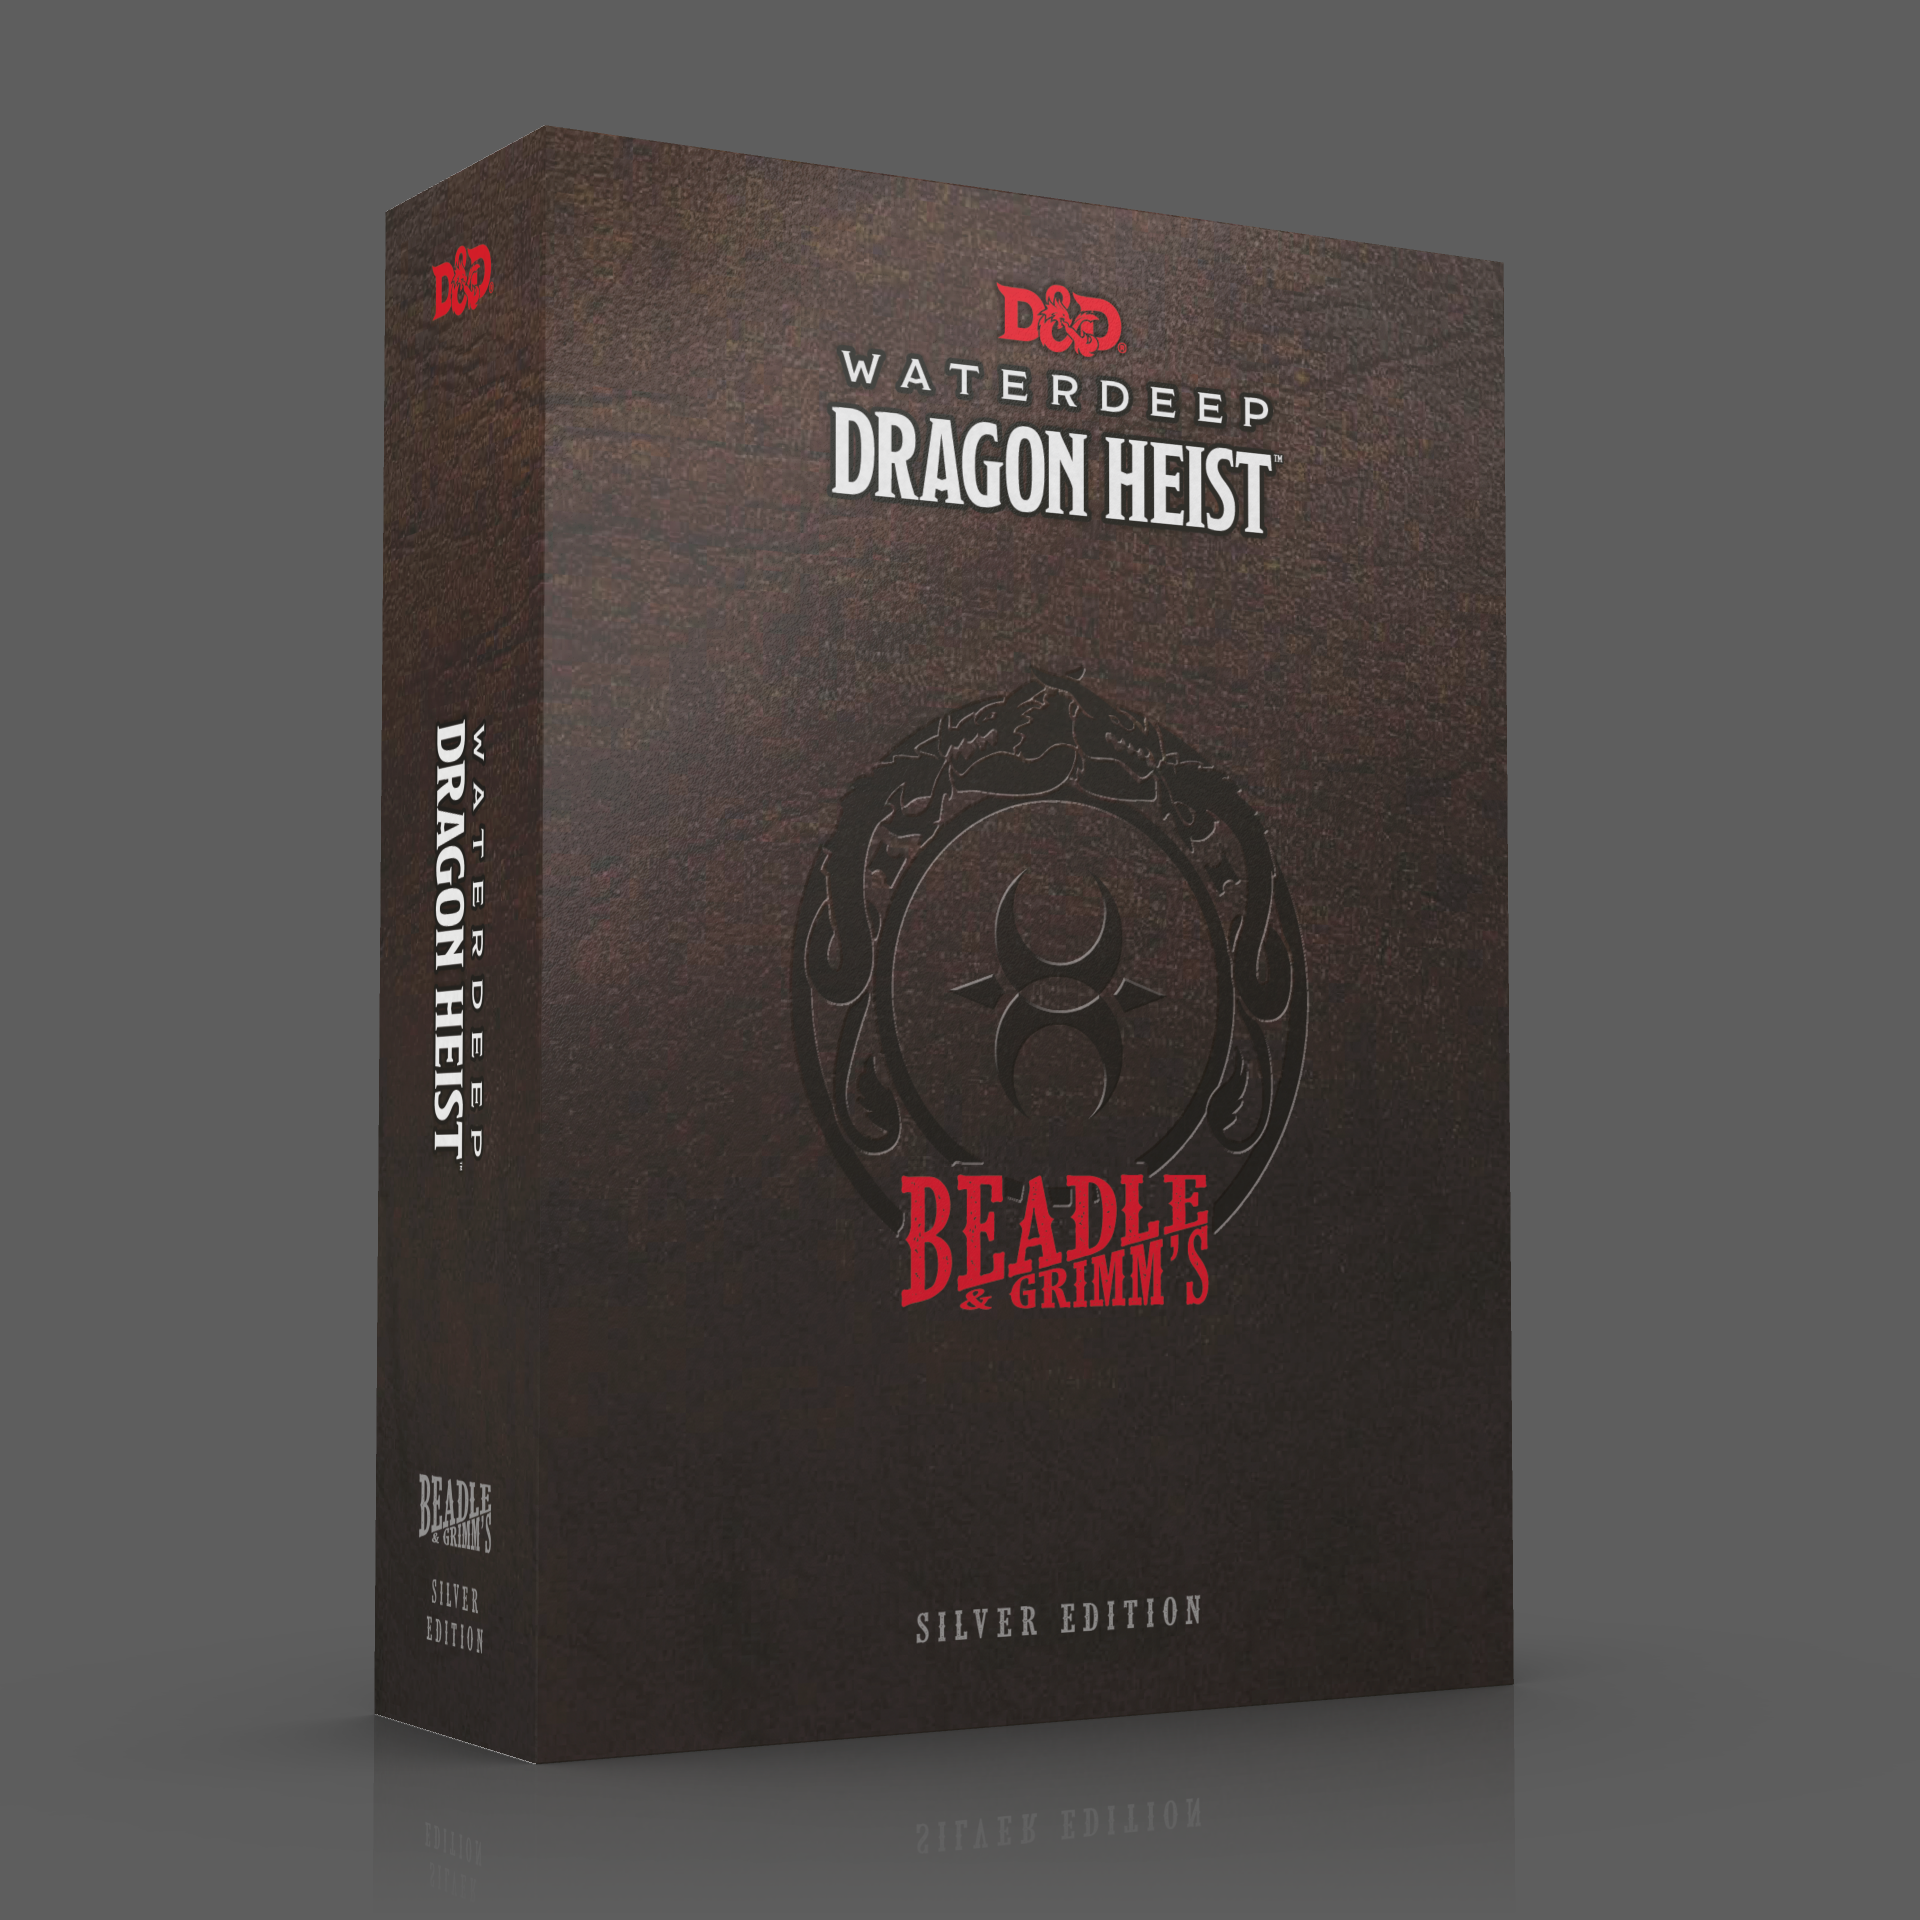 Silver Edition of Waterdeep: Dragon Heist